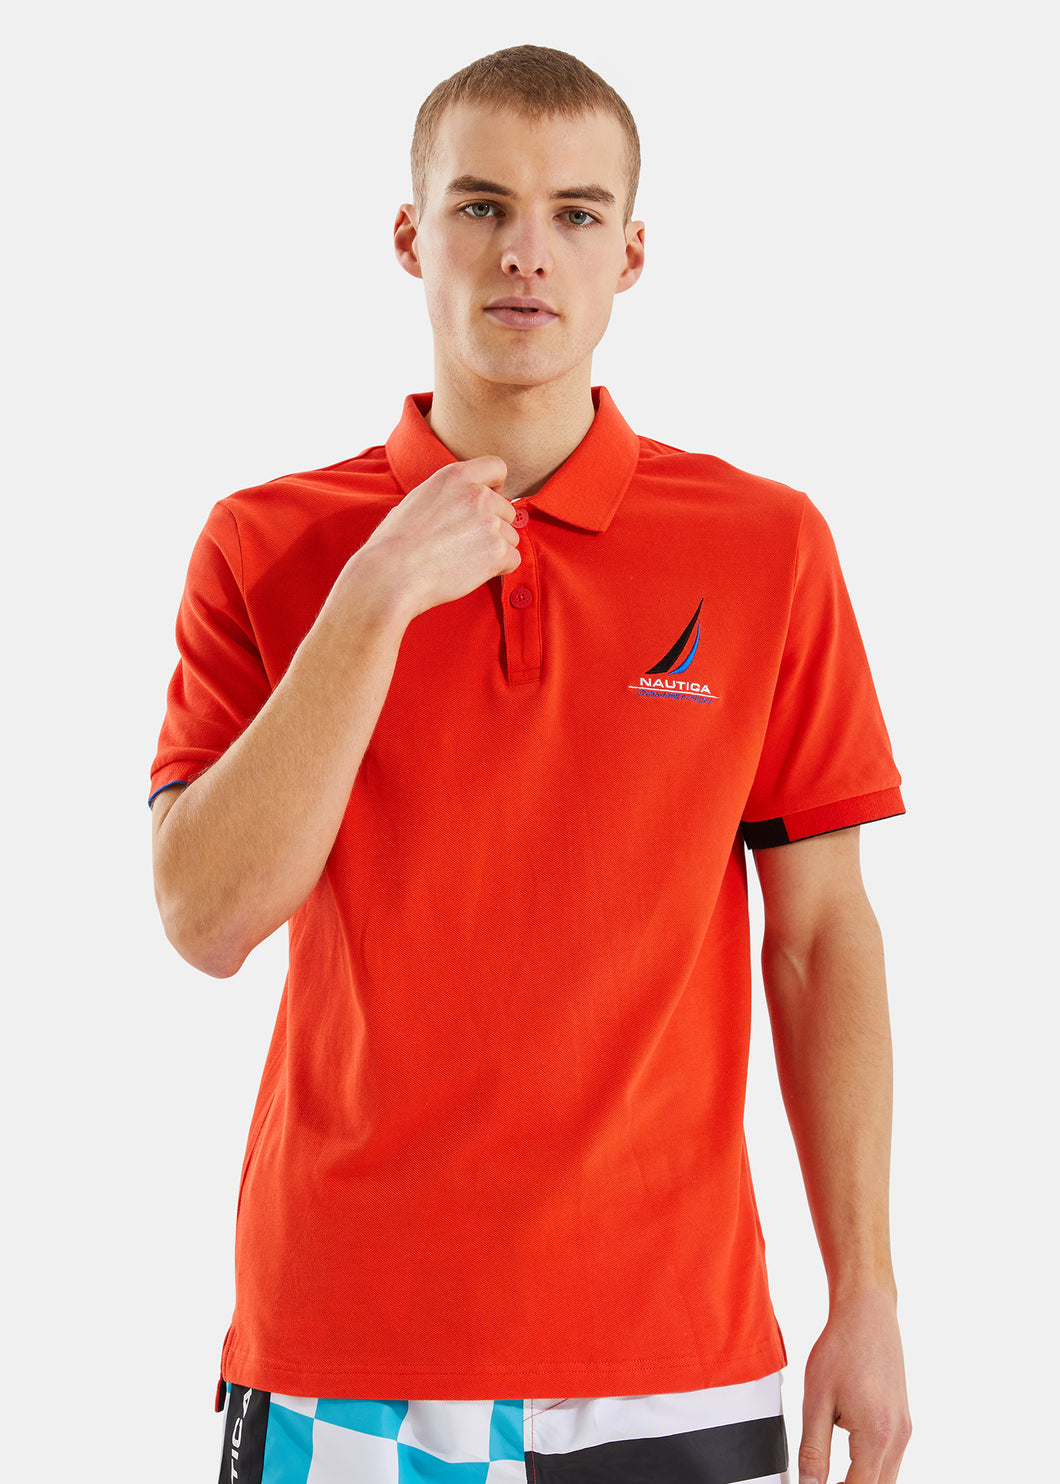 Nautica T Shirt Mens Large Red Short Sleeve Full Front Logo